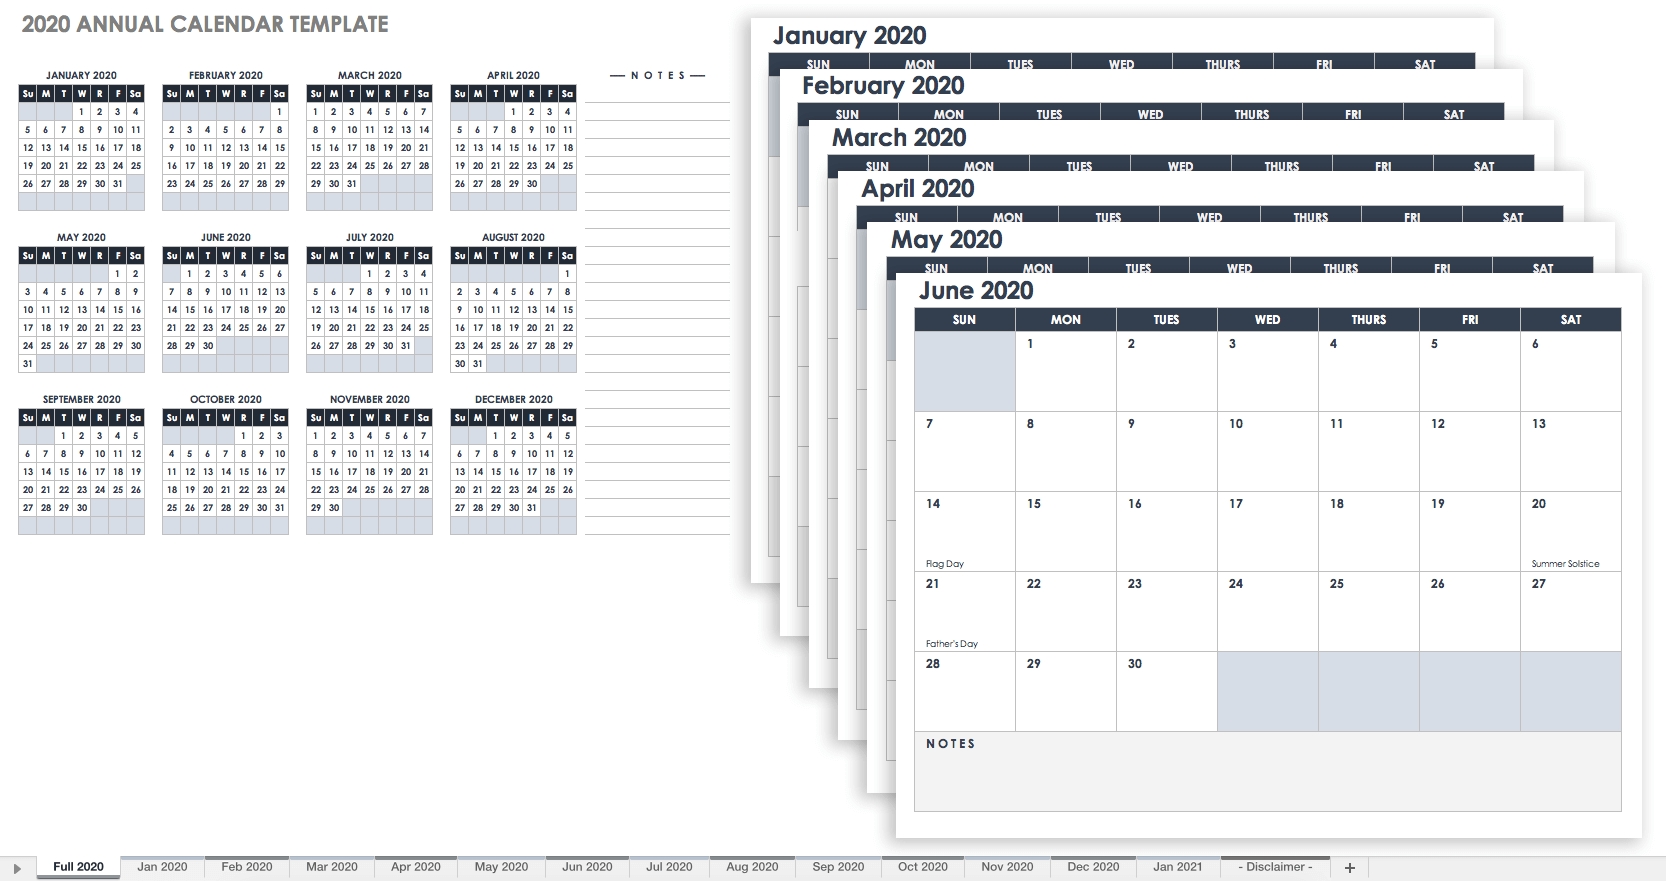 Free Blank Calendar Templates - Smartsheet-Calendar Template No Weekends